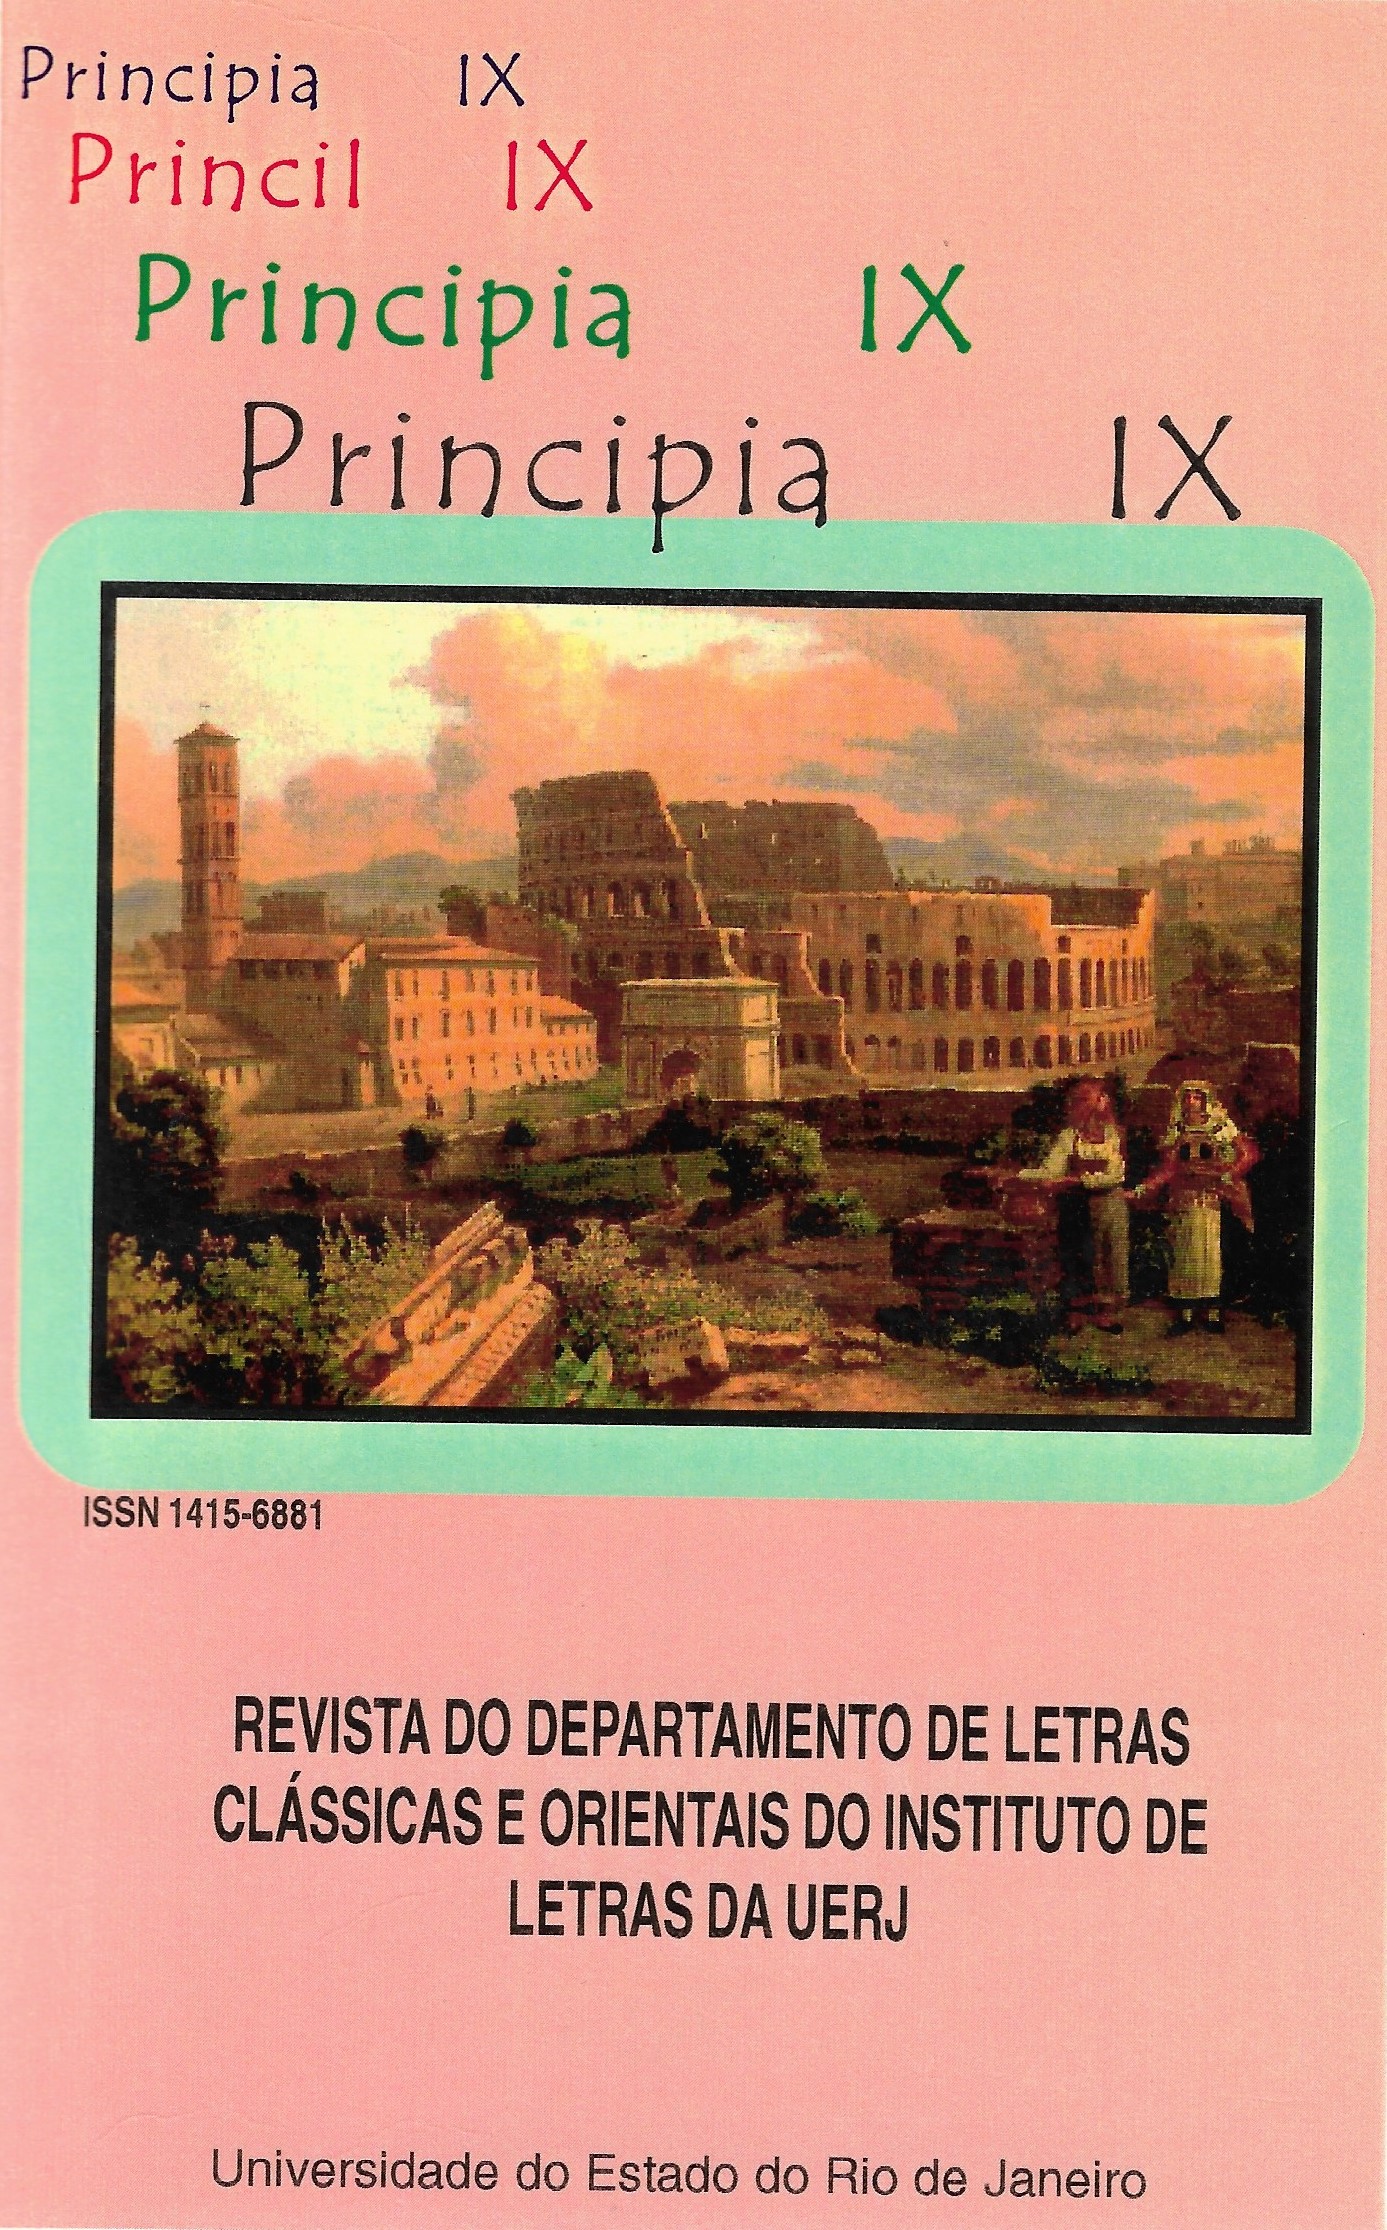 					View No. 9 (2002): Principia IX
				